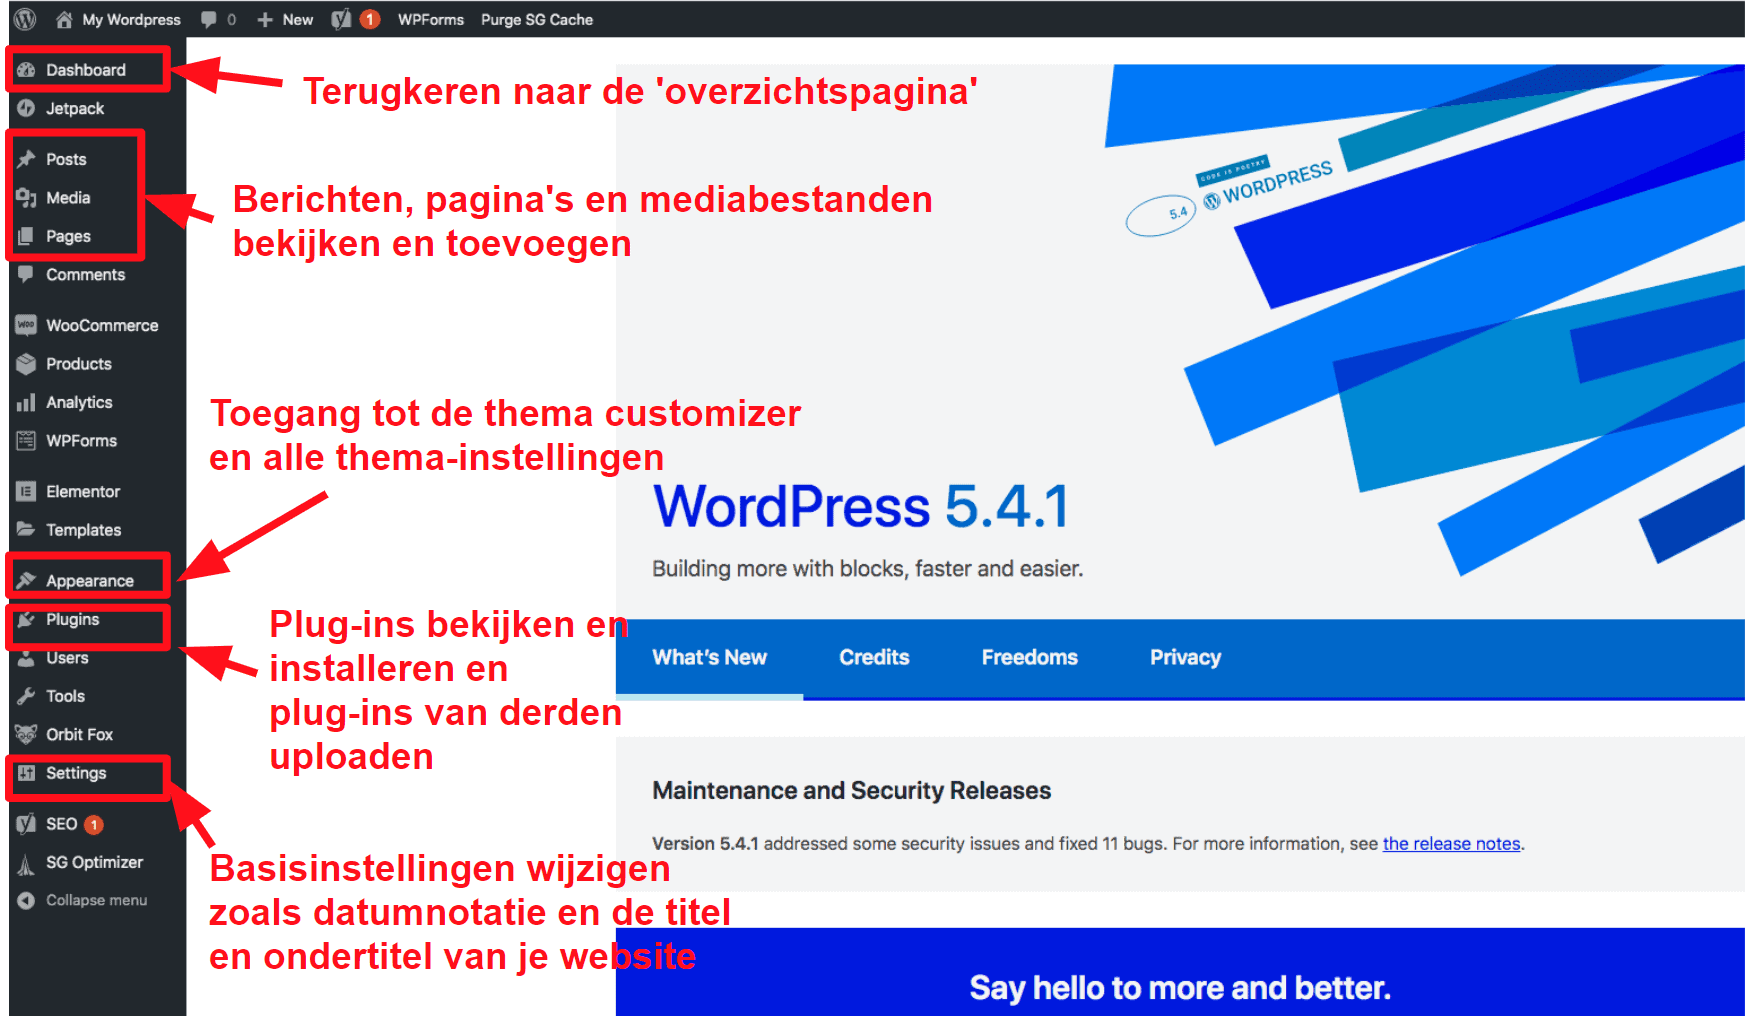 The WordPress dashboard NL16 1